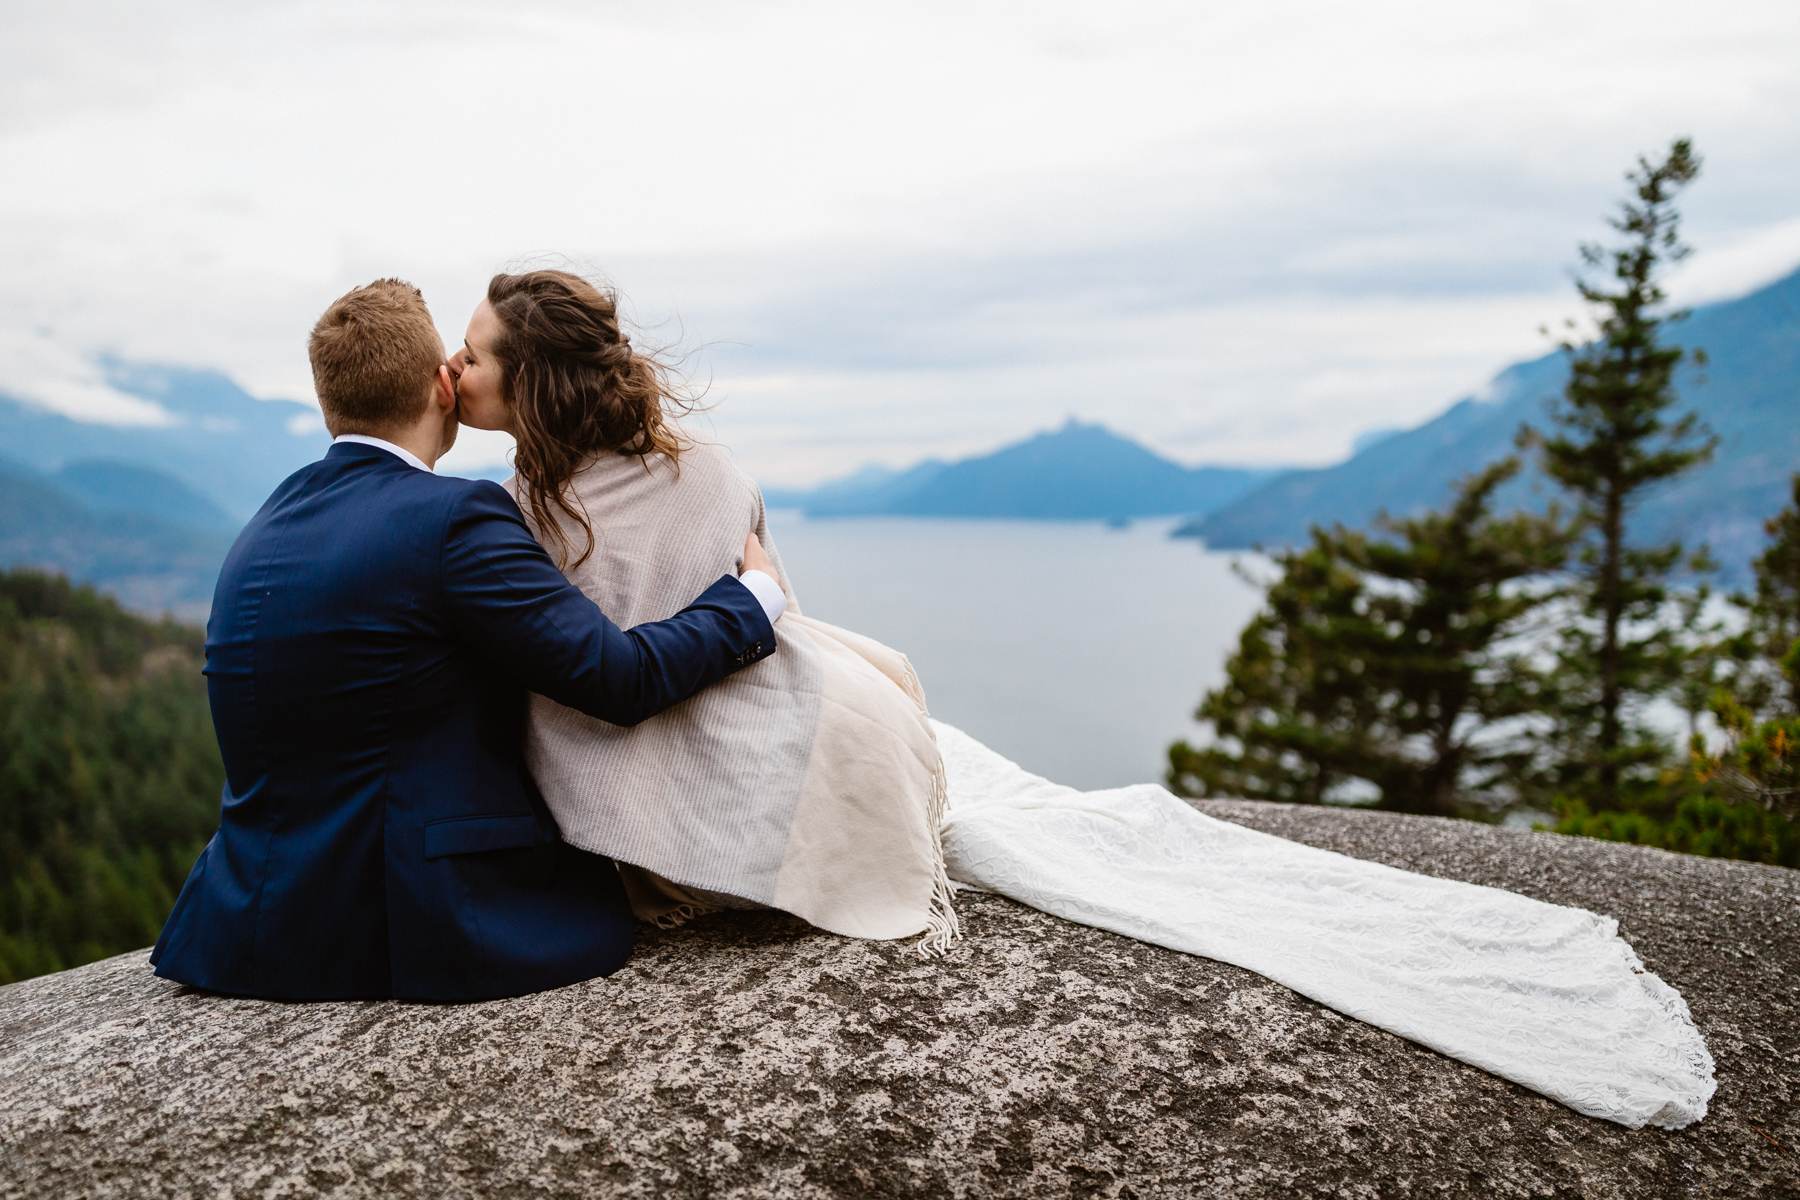 Squamish Wedding Photographers at an Adventurous Elopement - Image 42